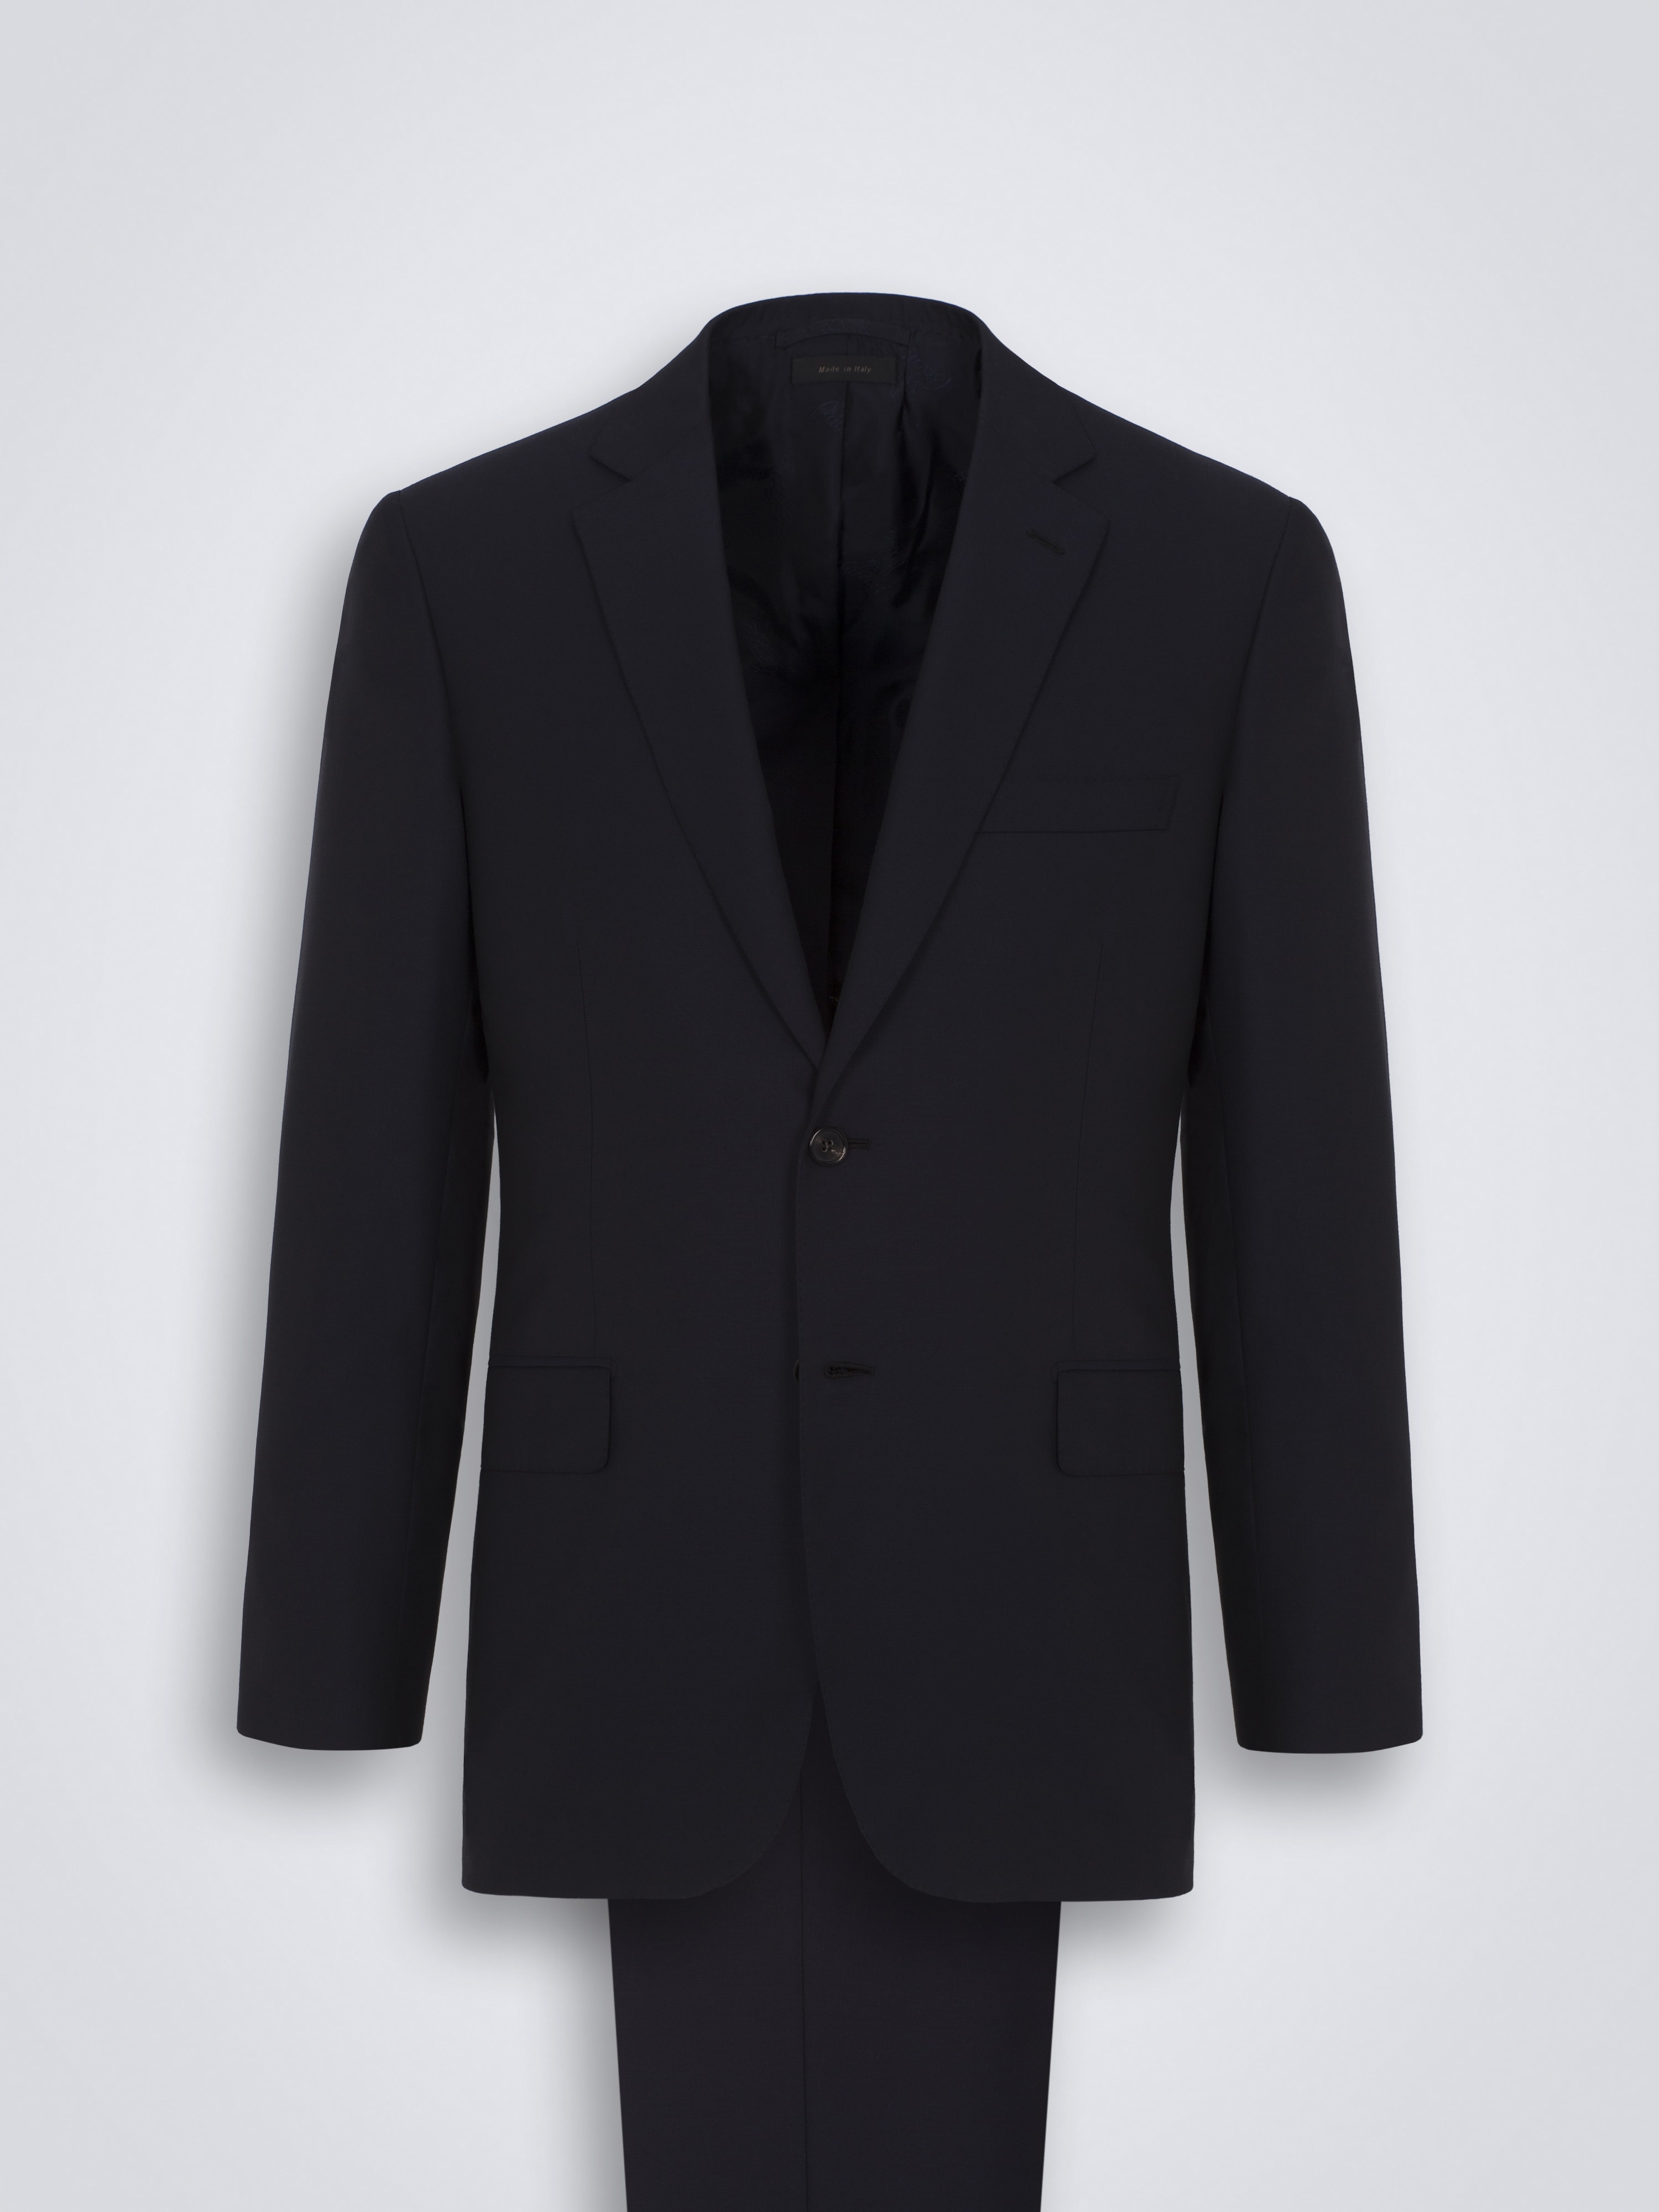 Essential' ブルニコ スーツ ネイビーブルースーパー160バージンウール ...